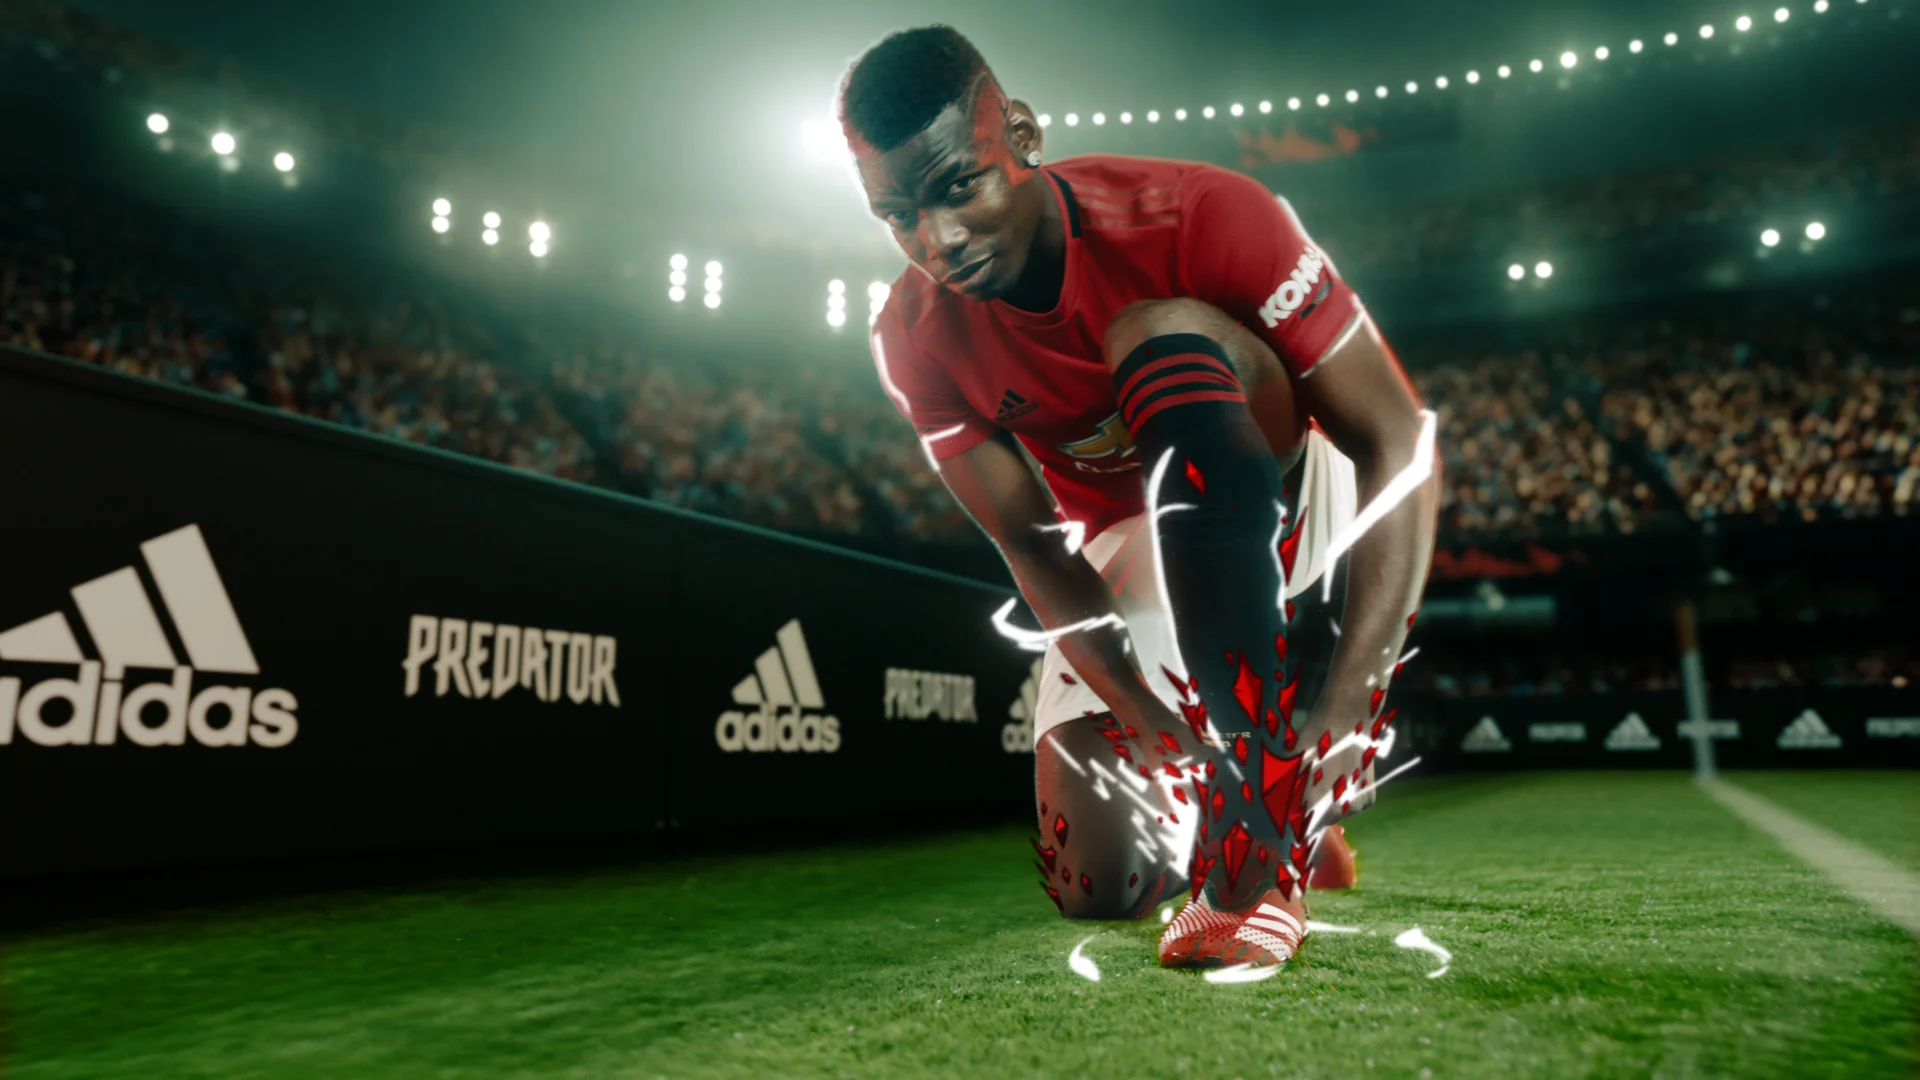 Adidas - '100% Unfair' Predator Mutator - Directors Cut on Vimeo